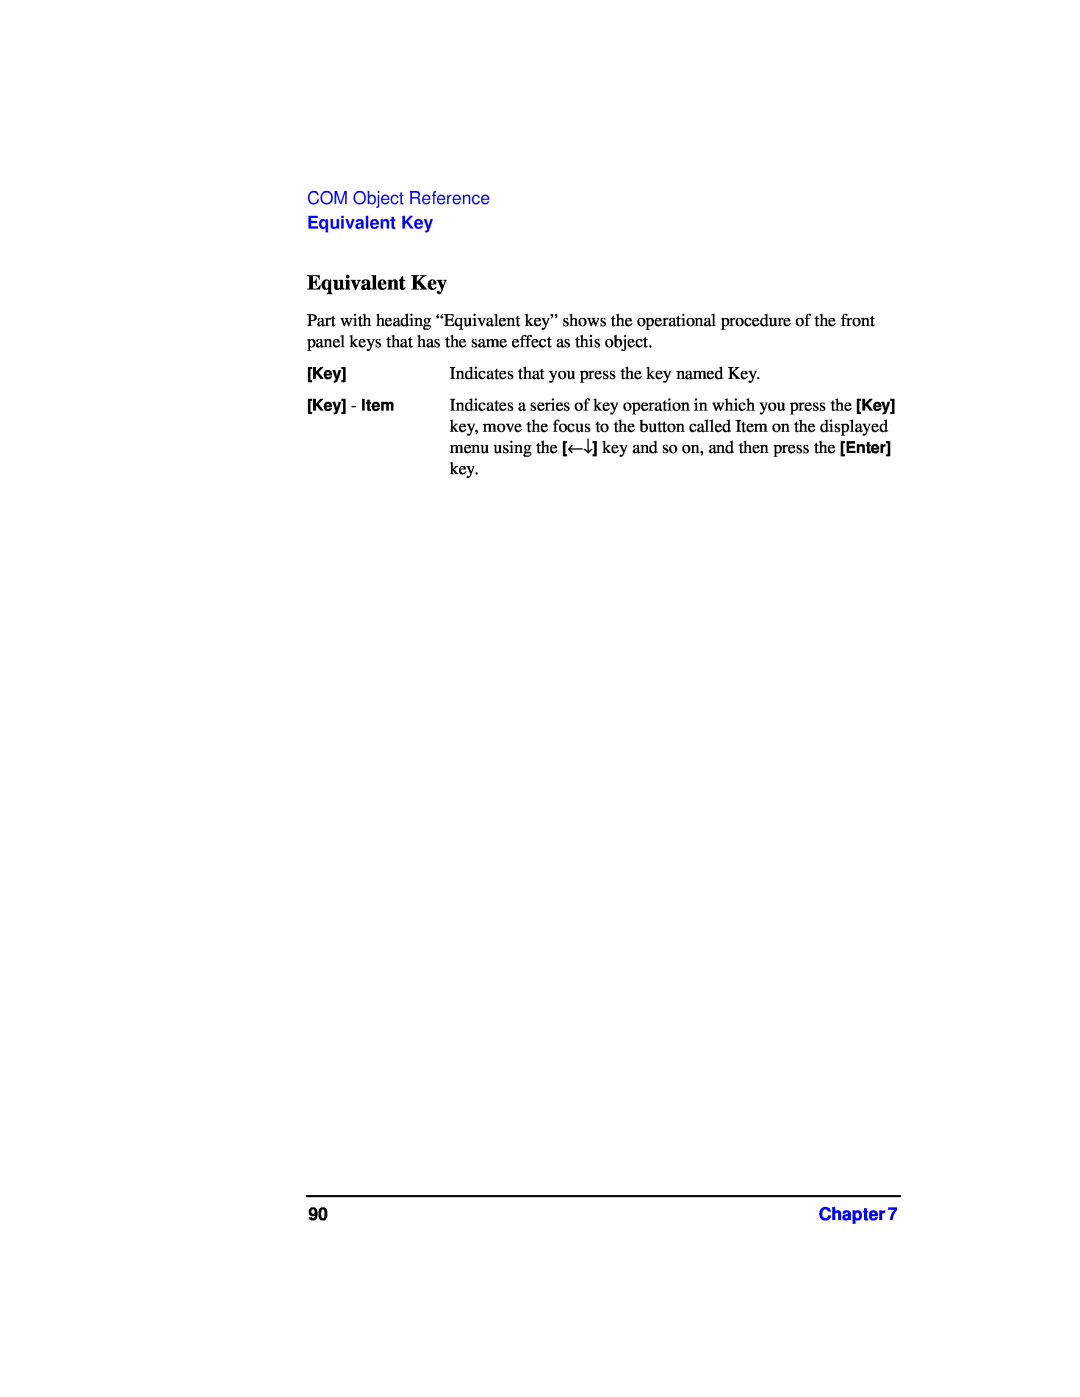 Agilent Technologies 87075C manual Equivalent Key, COM Object Reference, Key - Item, Chapter 